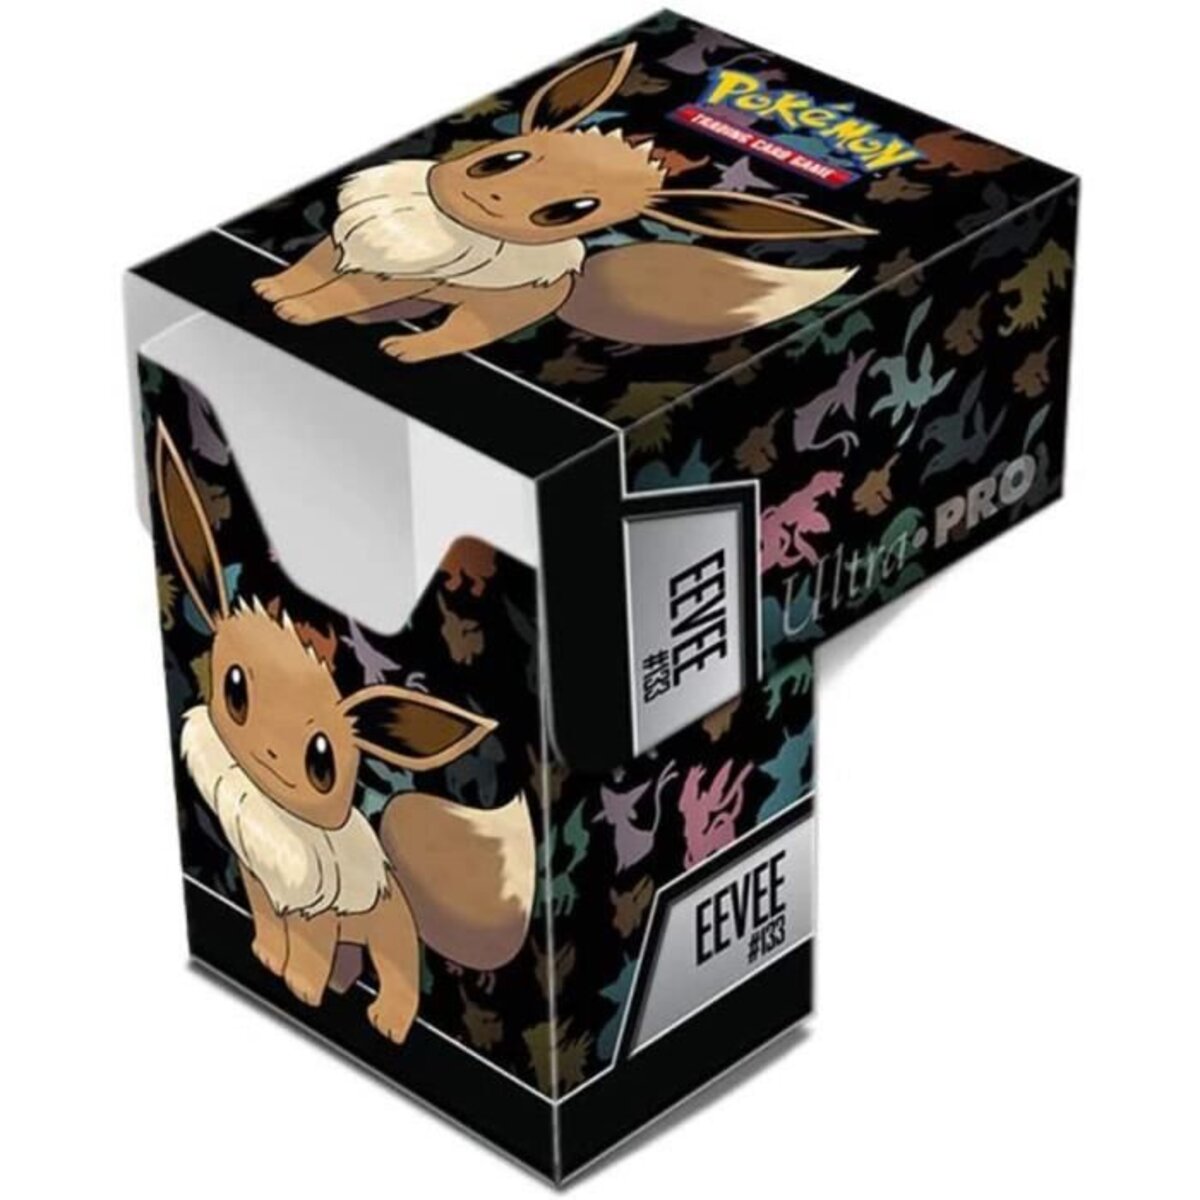 Boite de Rangement Flip Box - Pikachu Pokémon - UltraJeux